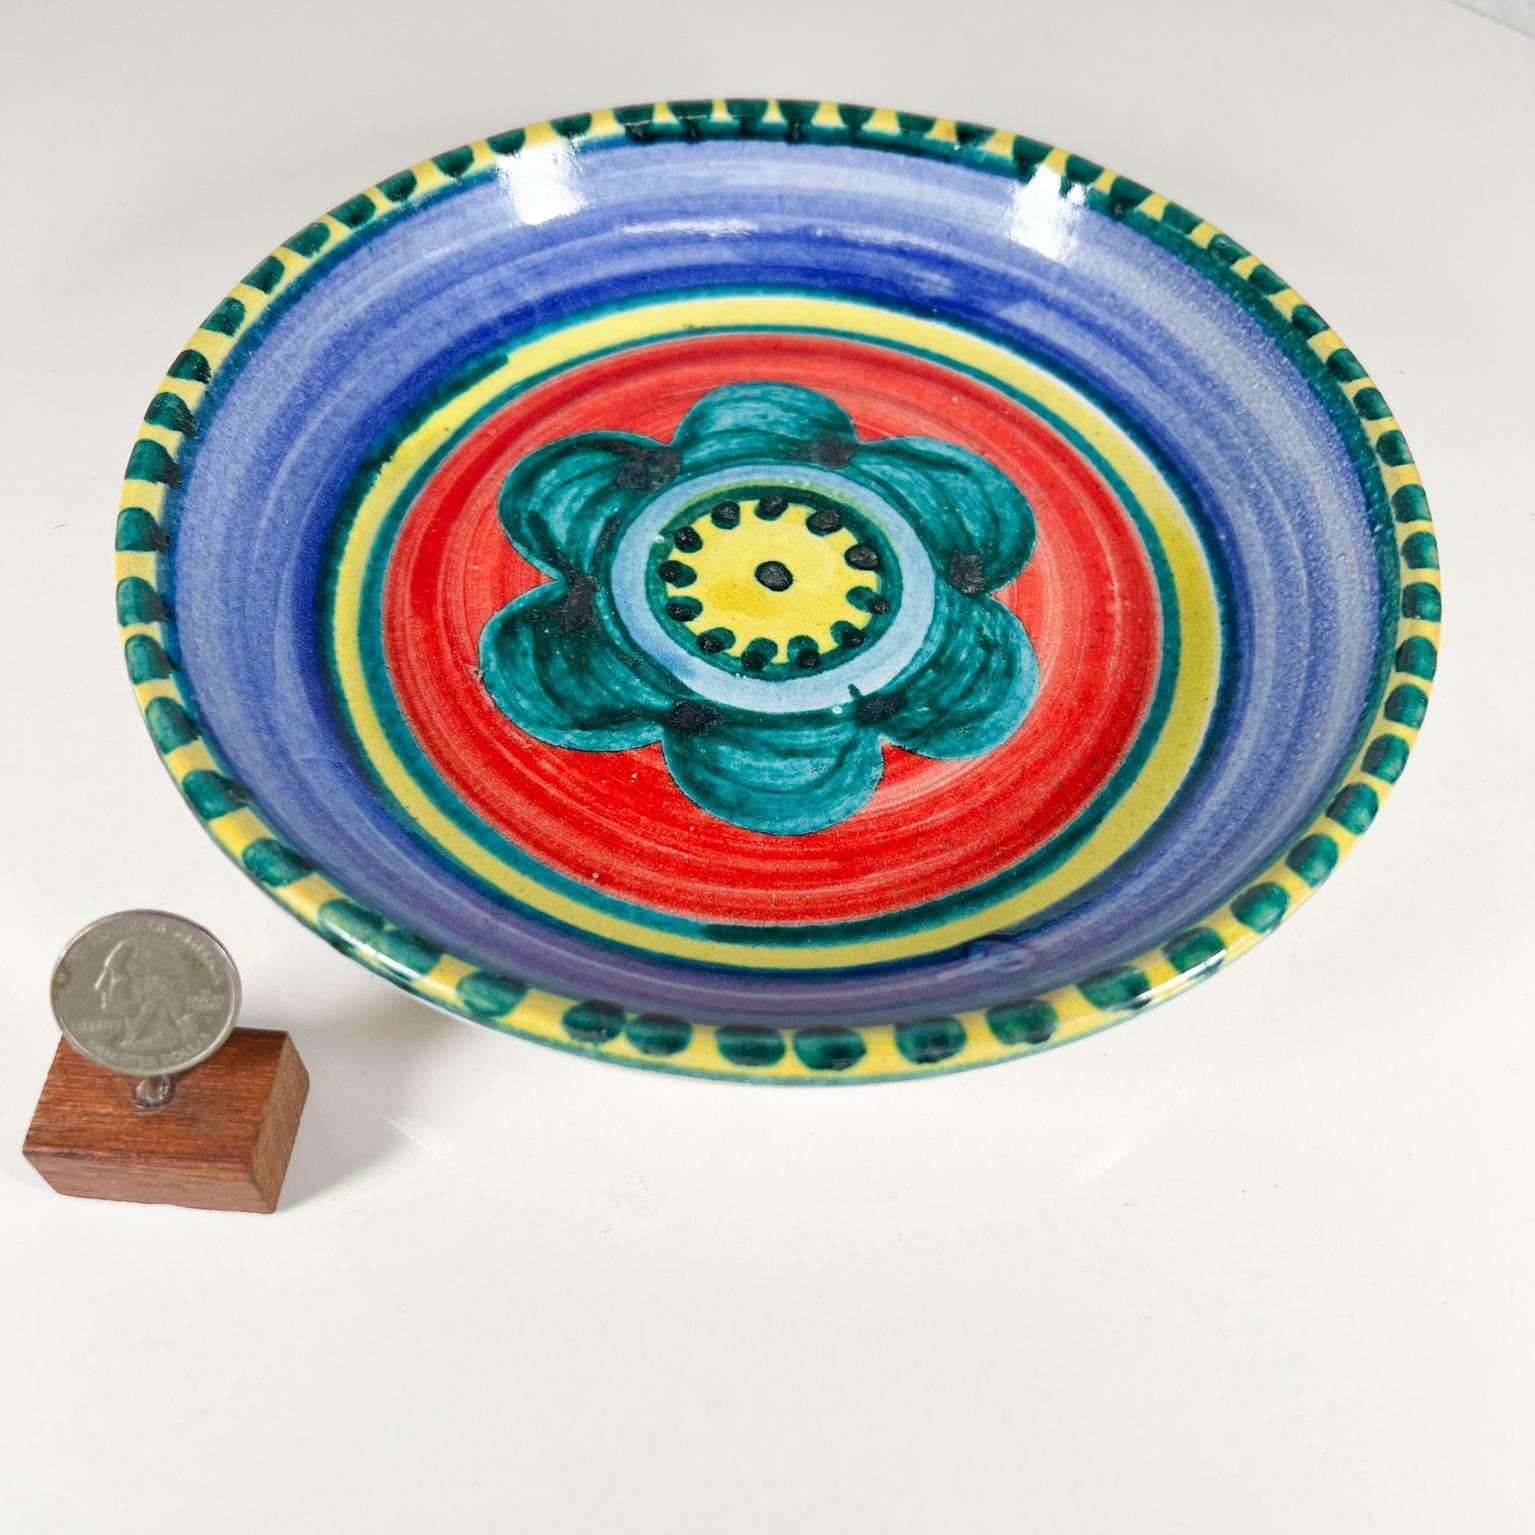 DeSimone Pottery Italien, farbenfrohe Keramik-Kunstteller mit Aqua-Blumenschale (Italienisch)